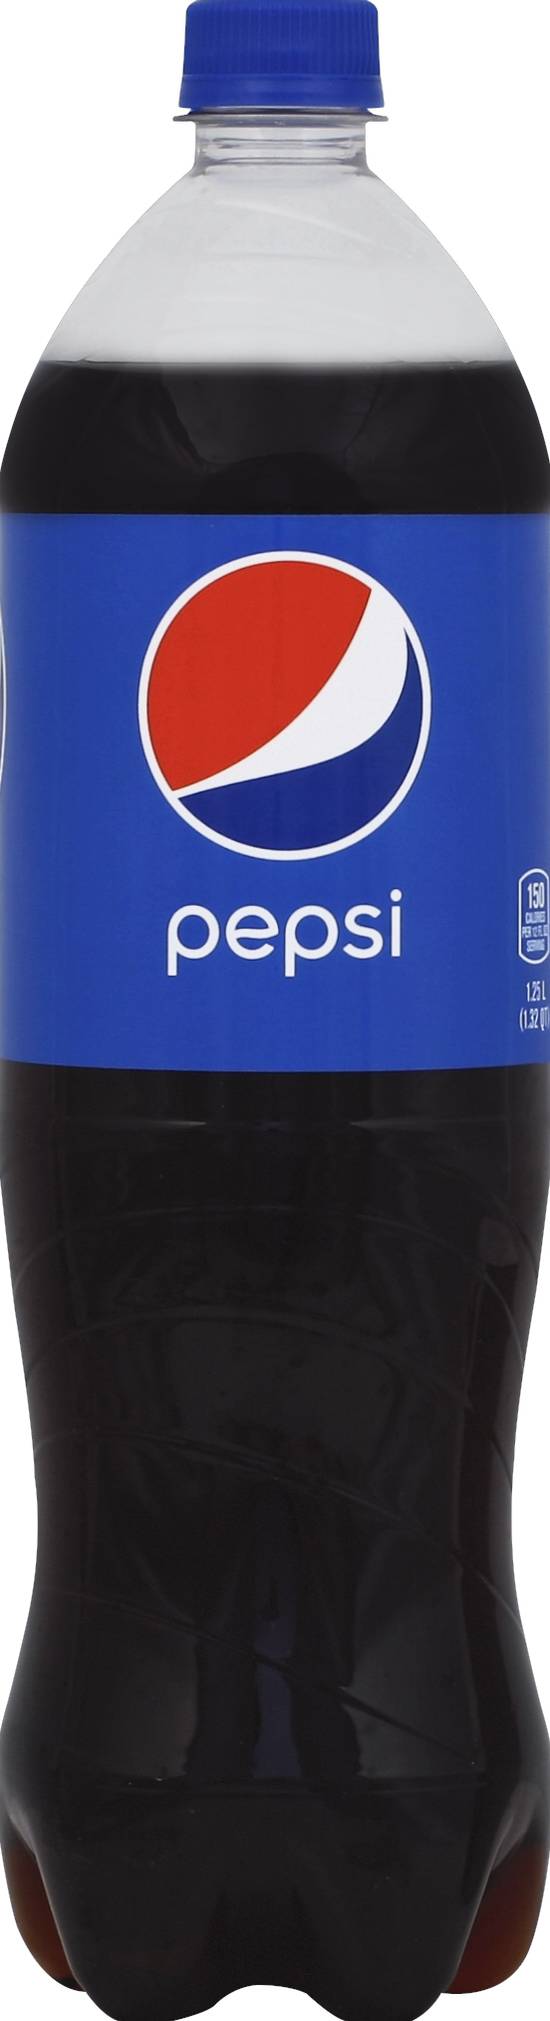 Pepsi Original Soda (12 fl oz)